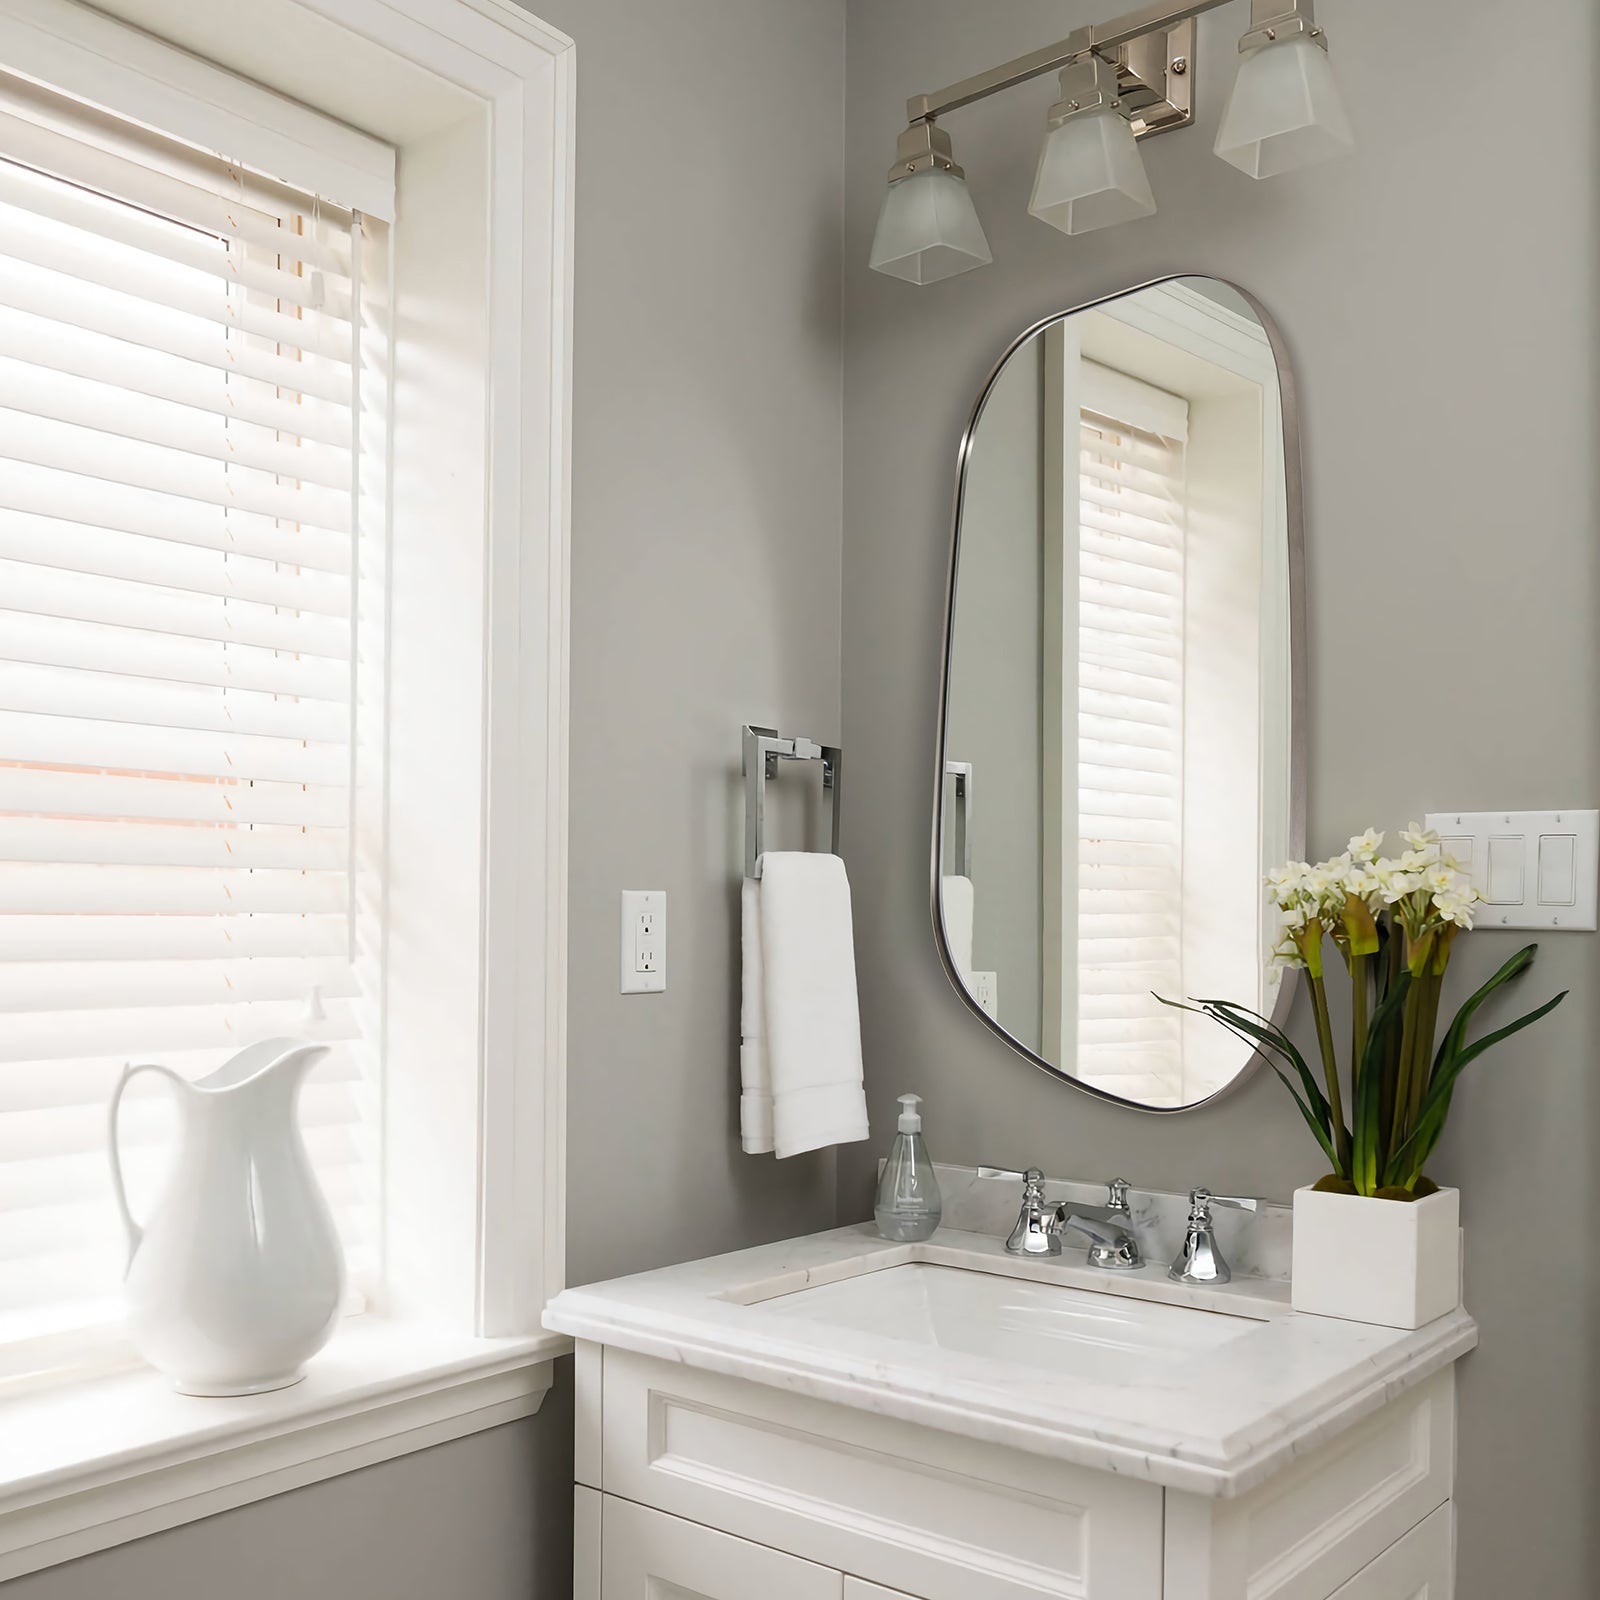 Irregular Asymmetrical Mirror for Bathroom, Living Room